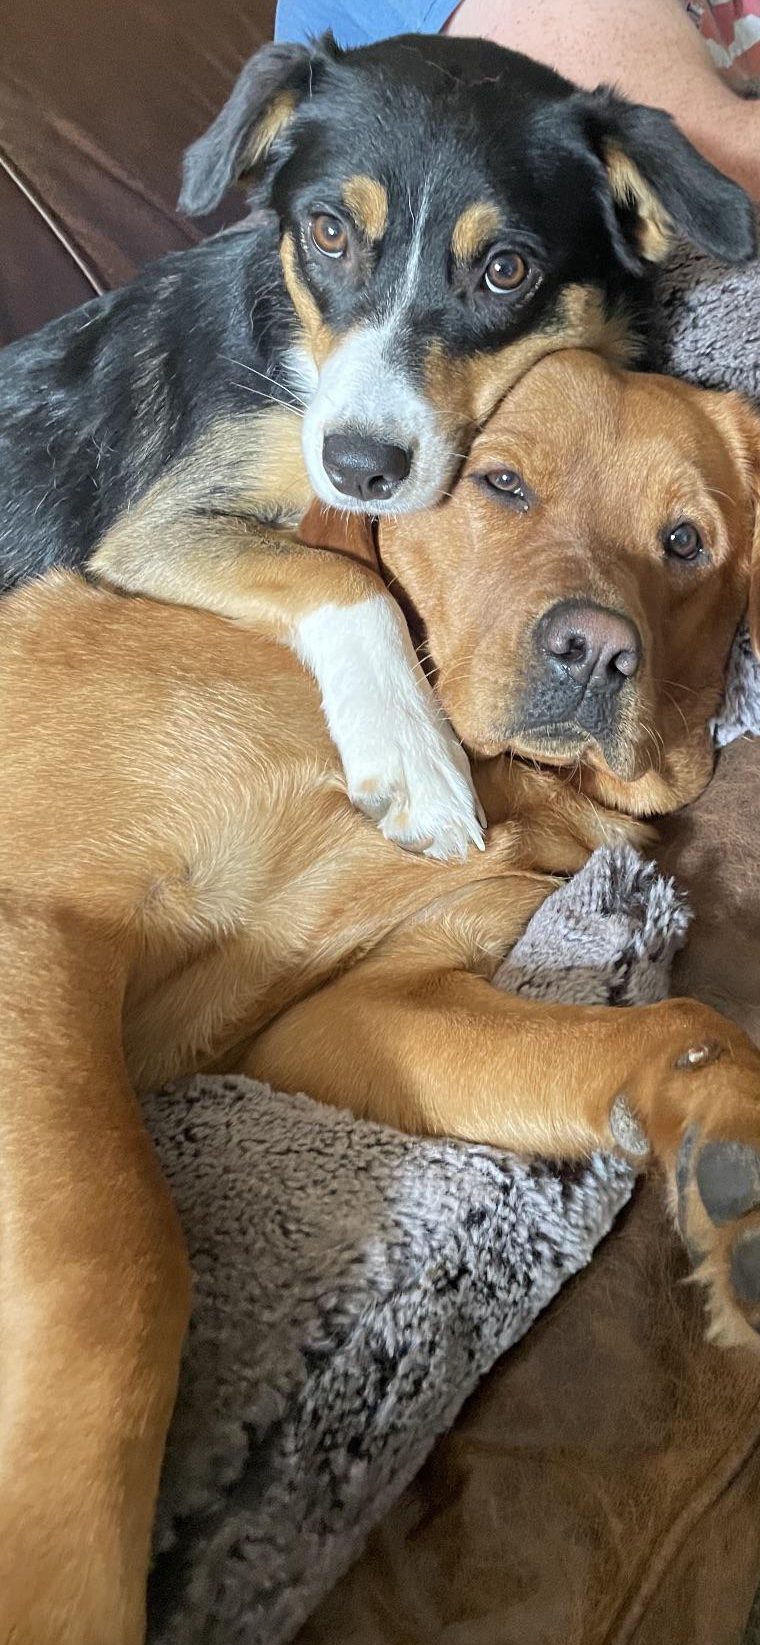 two dog best friends cuddling.